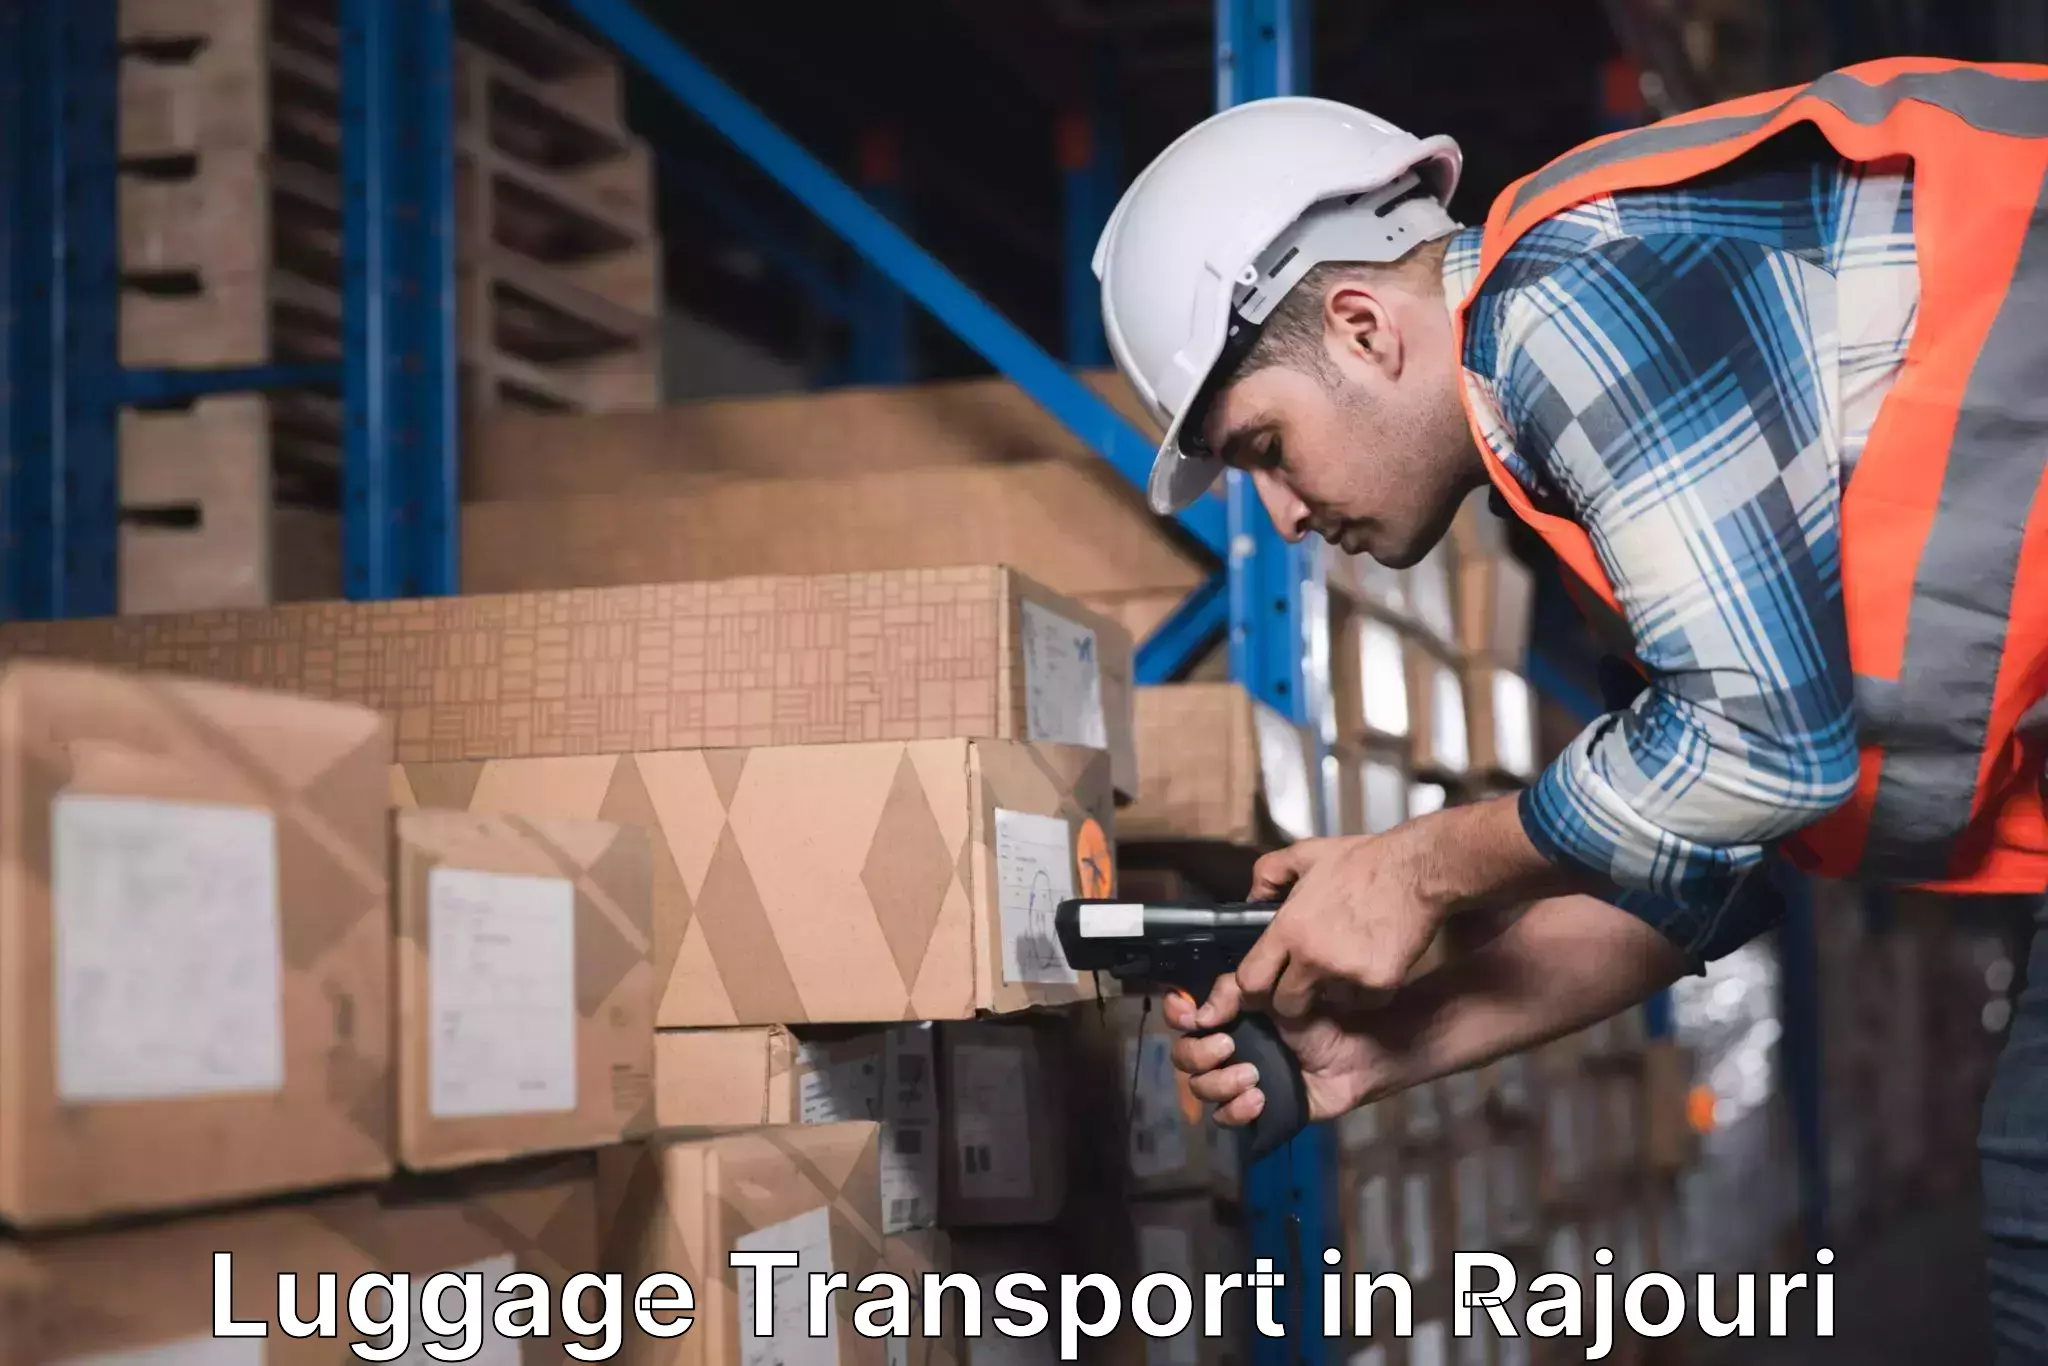 Group luggage shipping in Rajouri